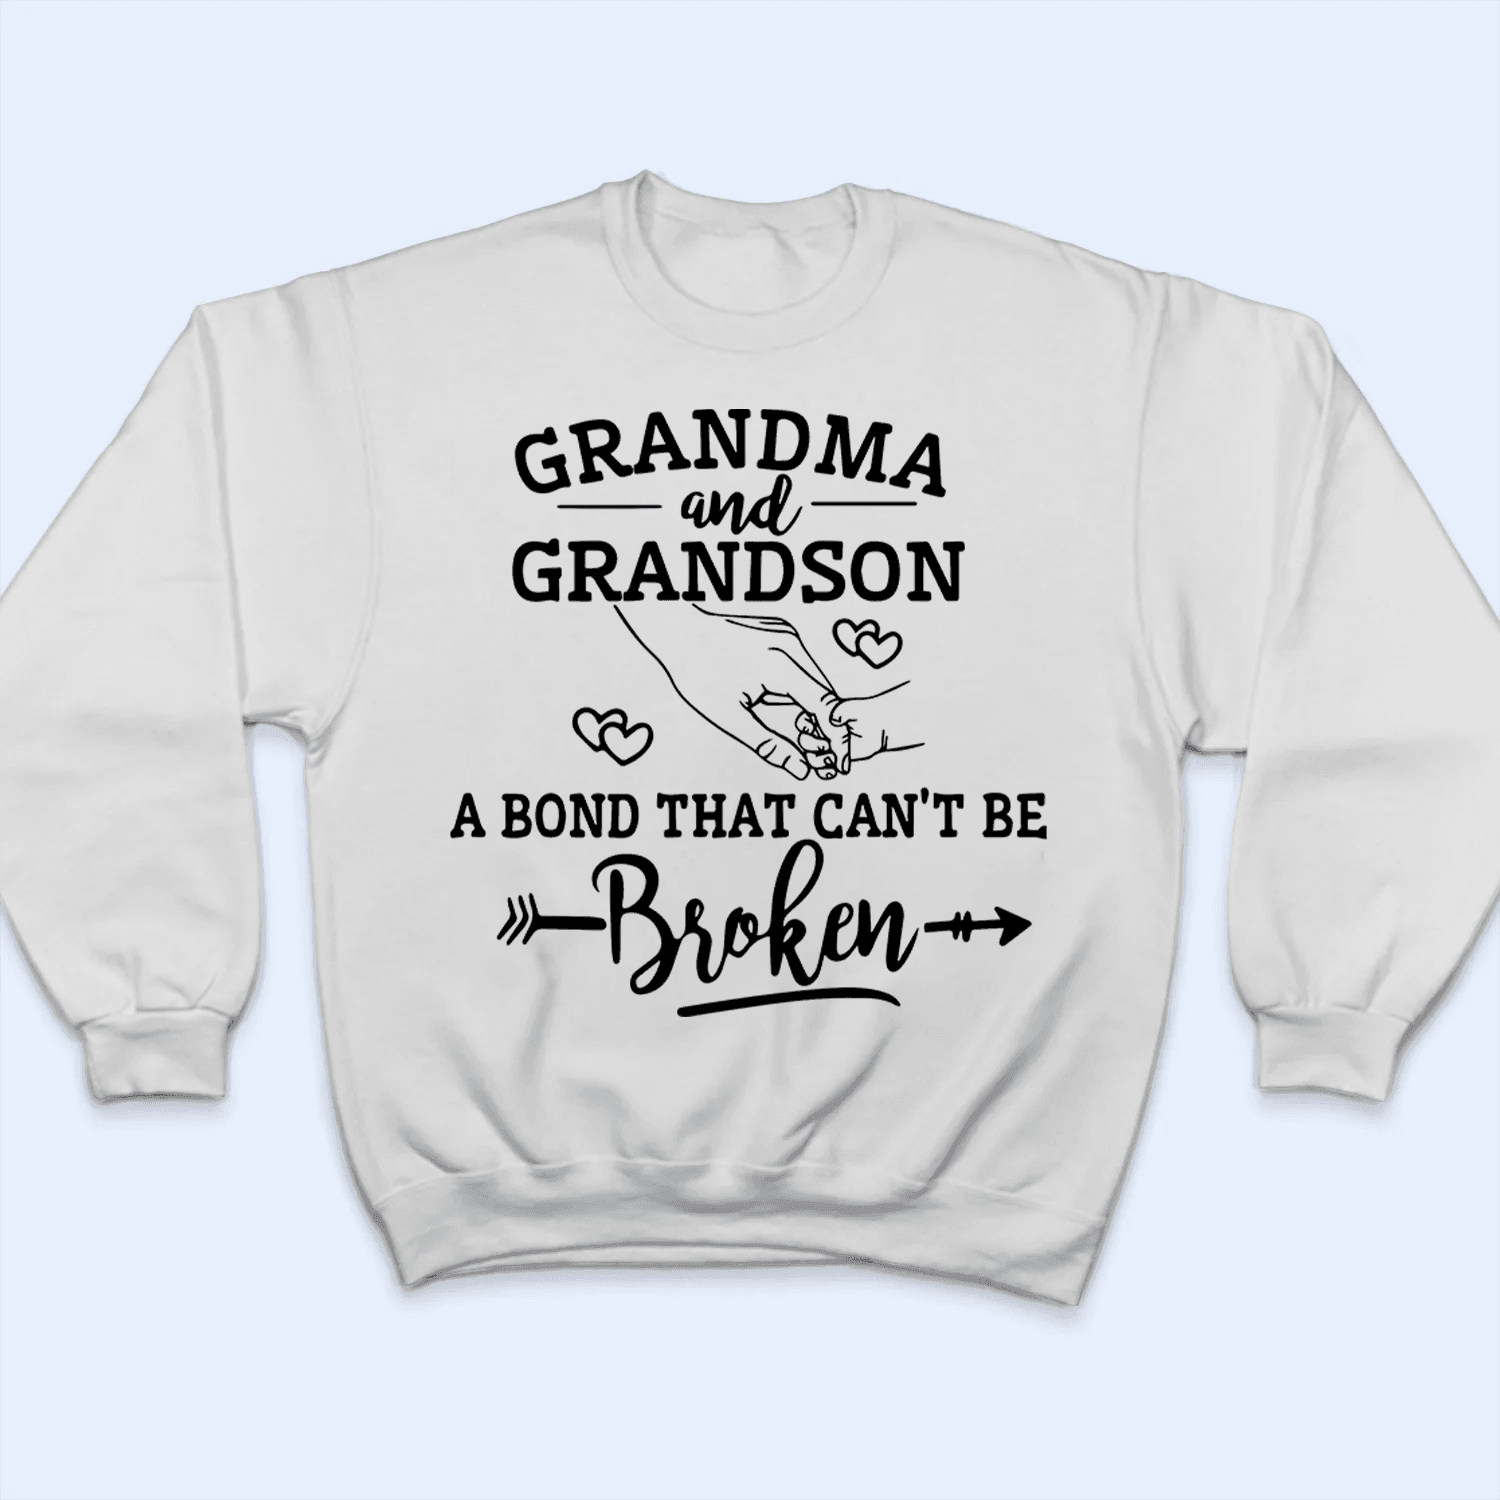 A Bond That Can't Be Broken - Personalized Custom T Shirt - Gift for Grandpa/Grandma, Mom, Dad, Grandparent - Suzitee Store